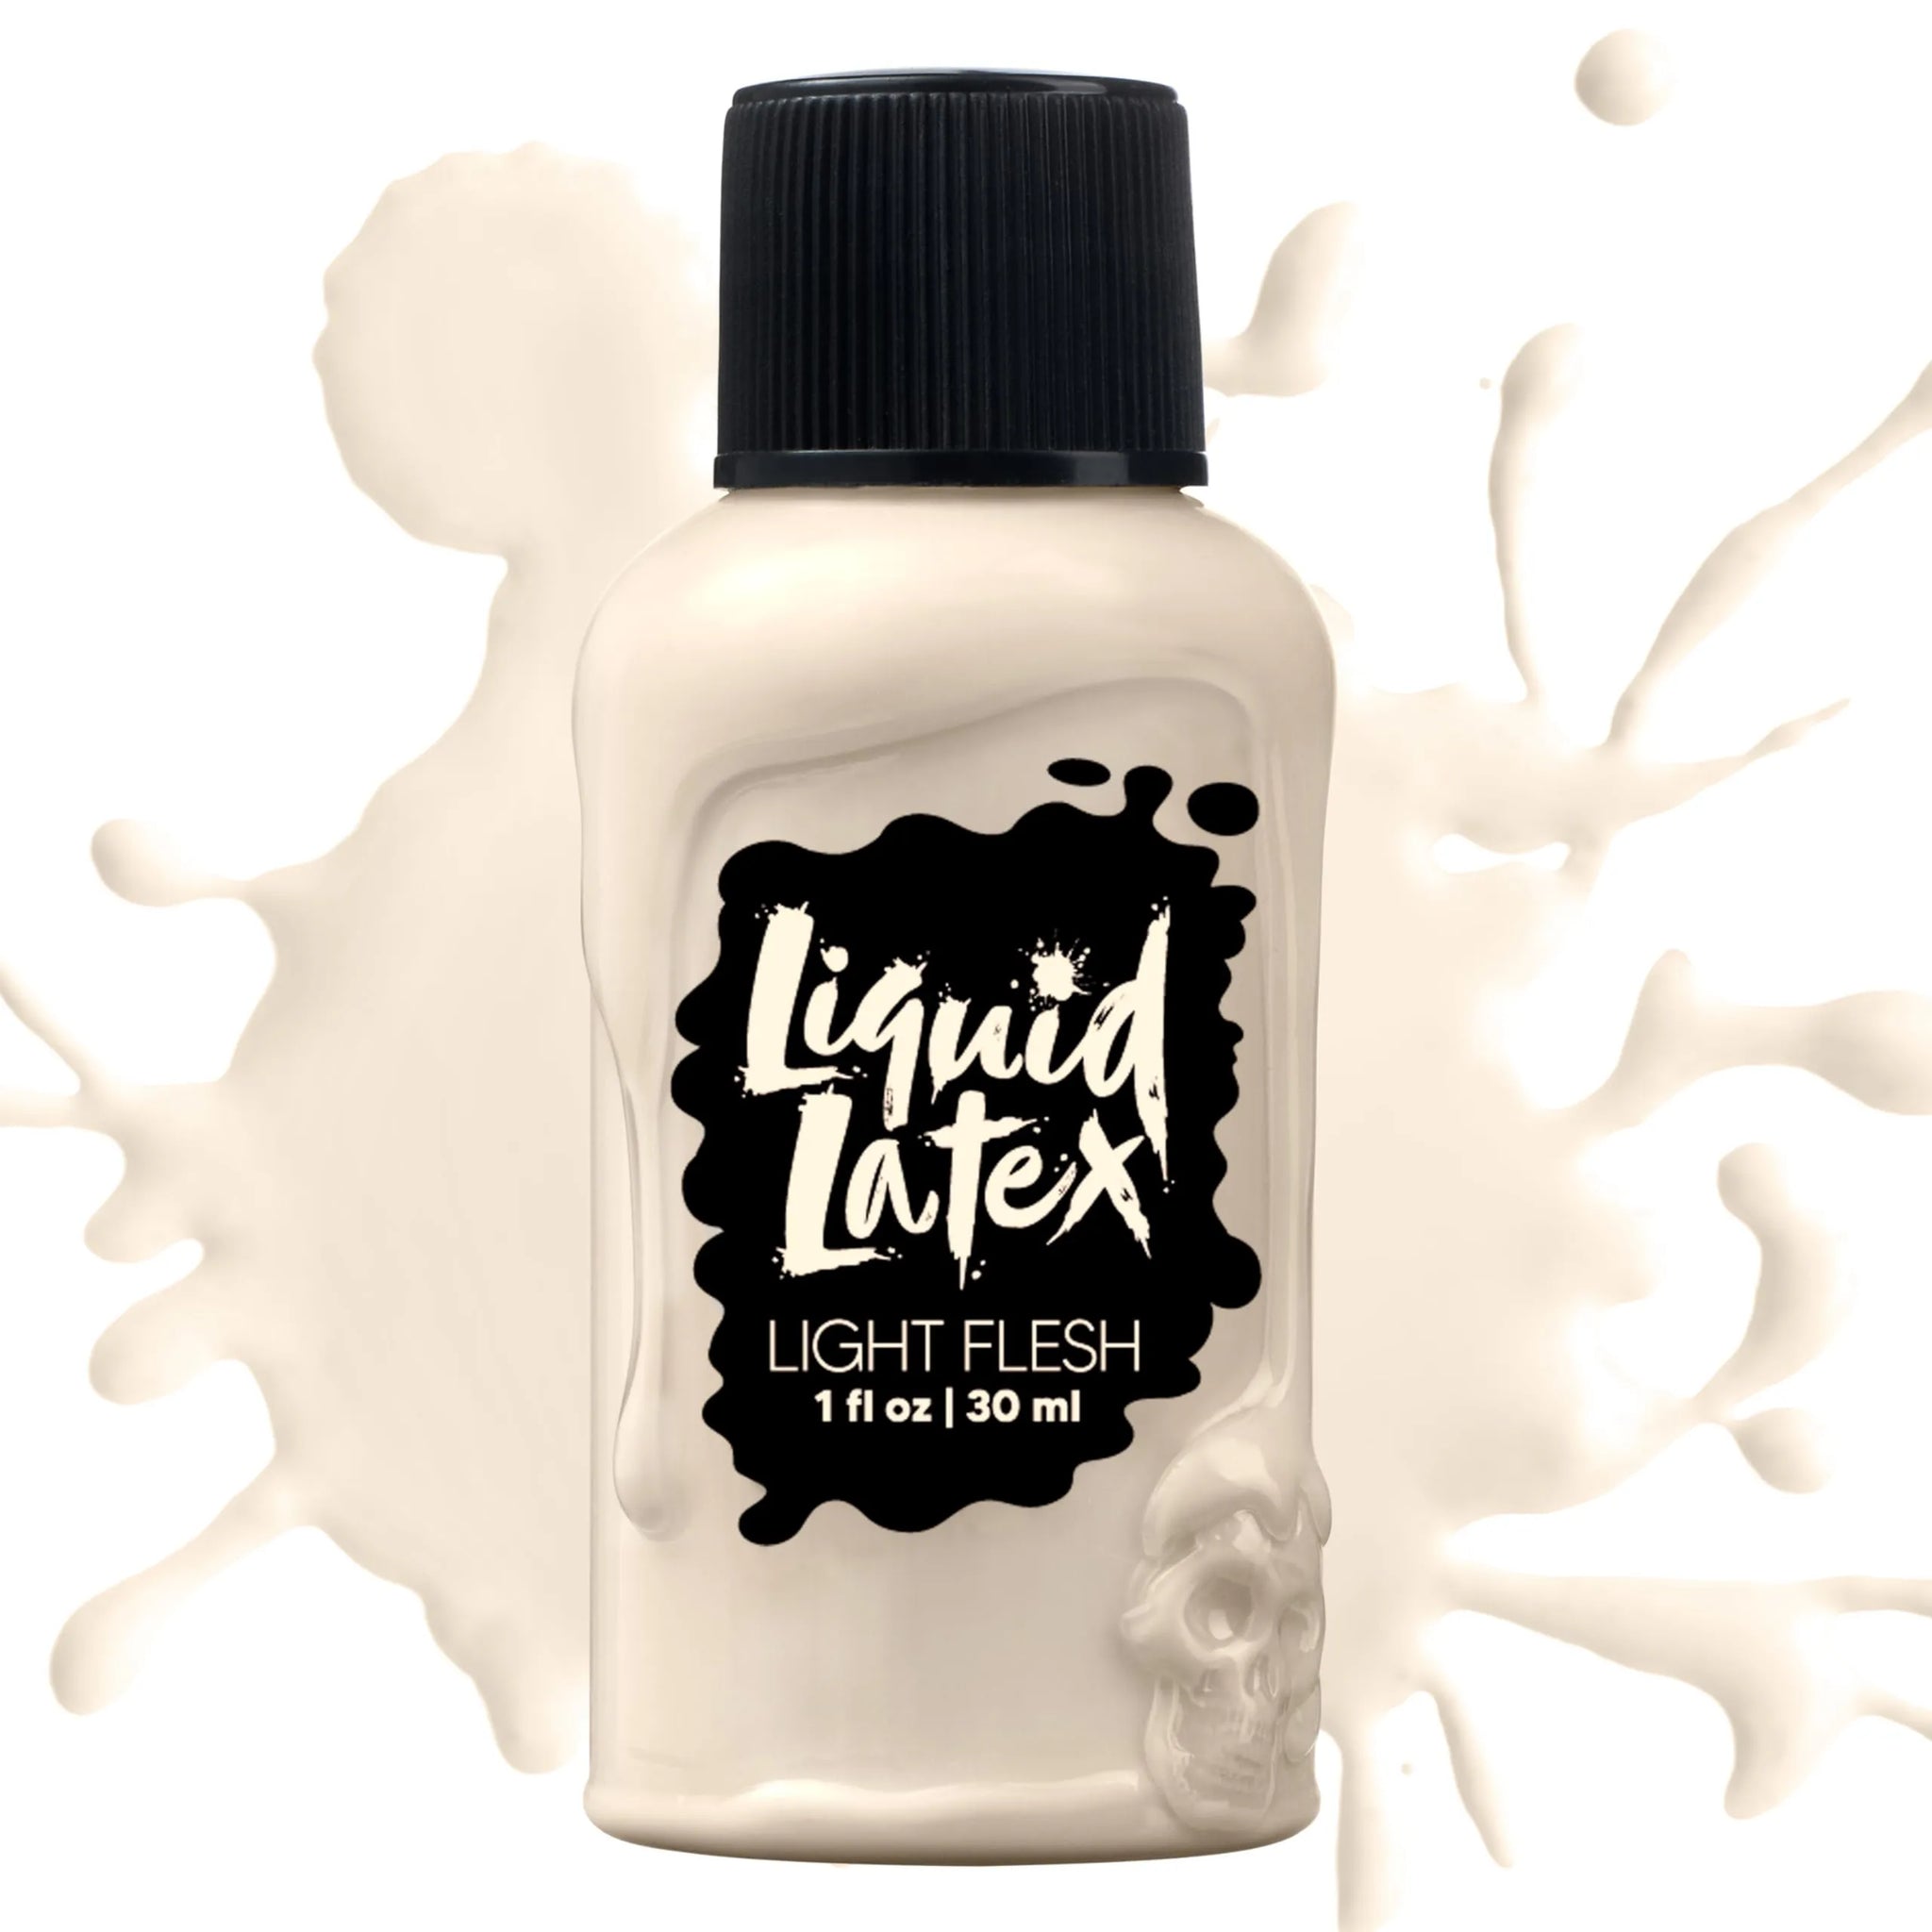 Adult Liquid Latex Halloween Makeup, $9.99